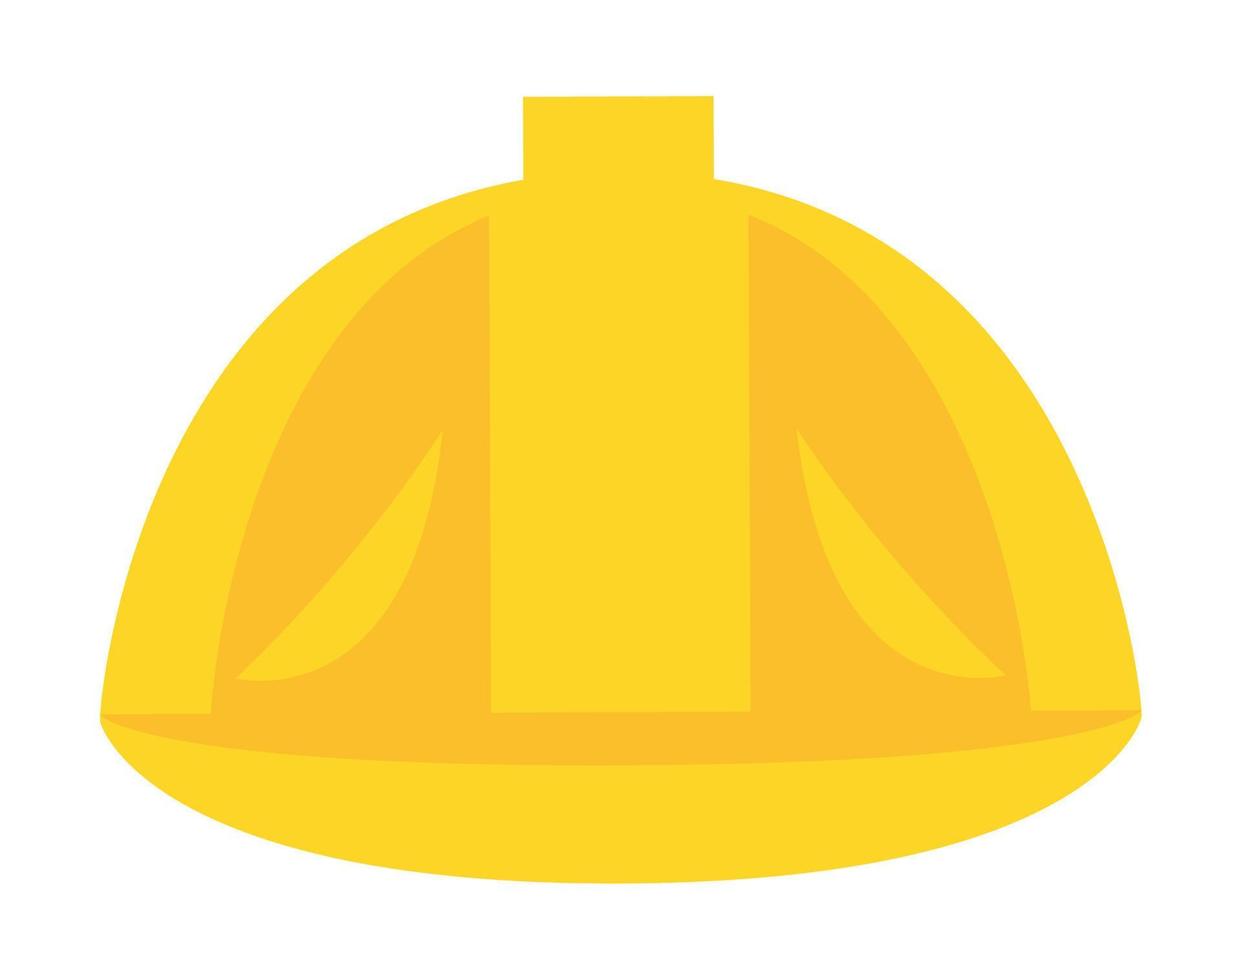 casco amarillo de construccion vector